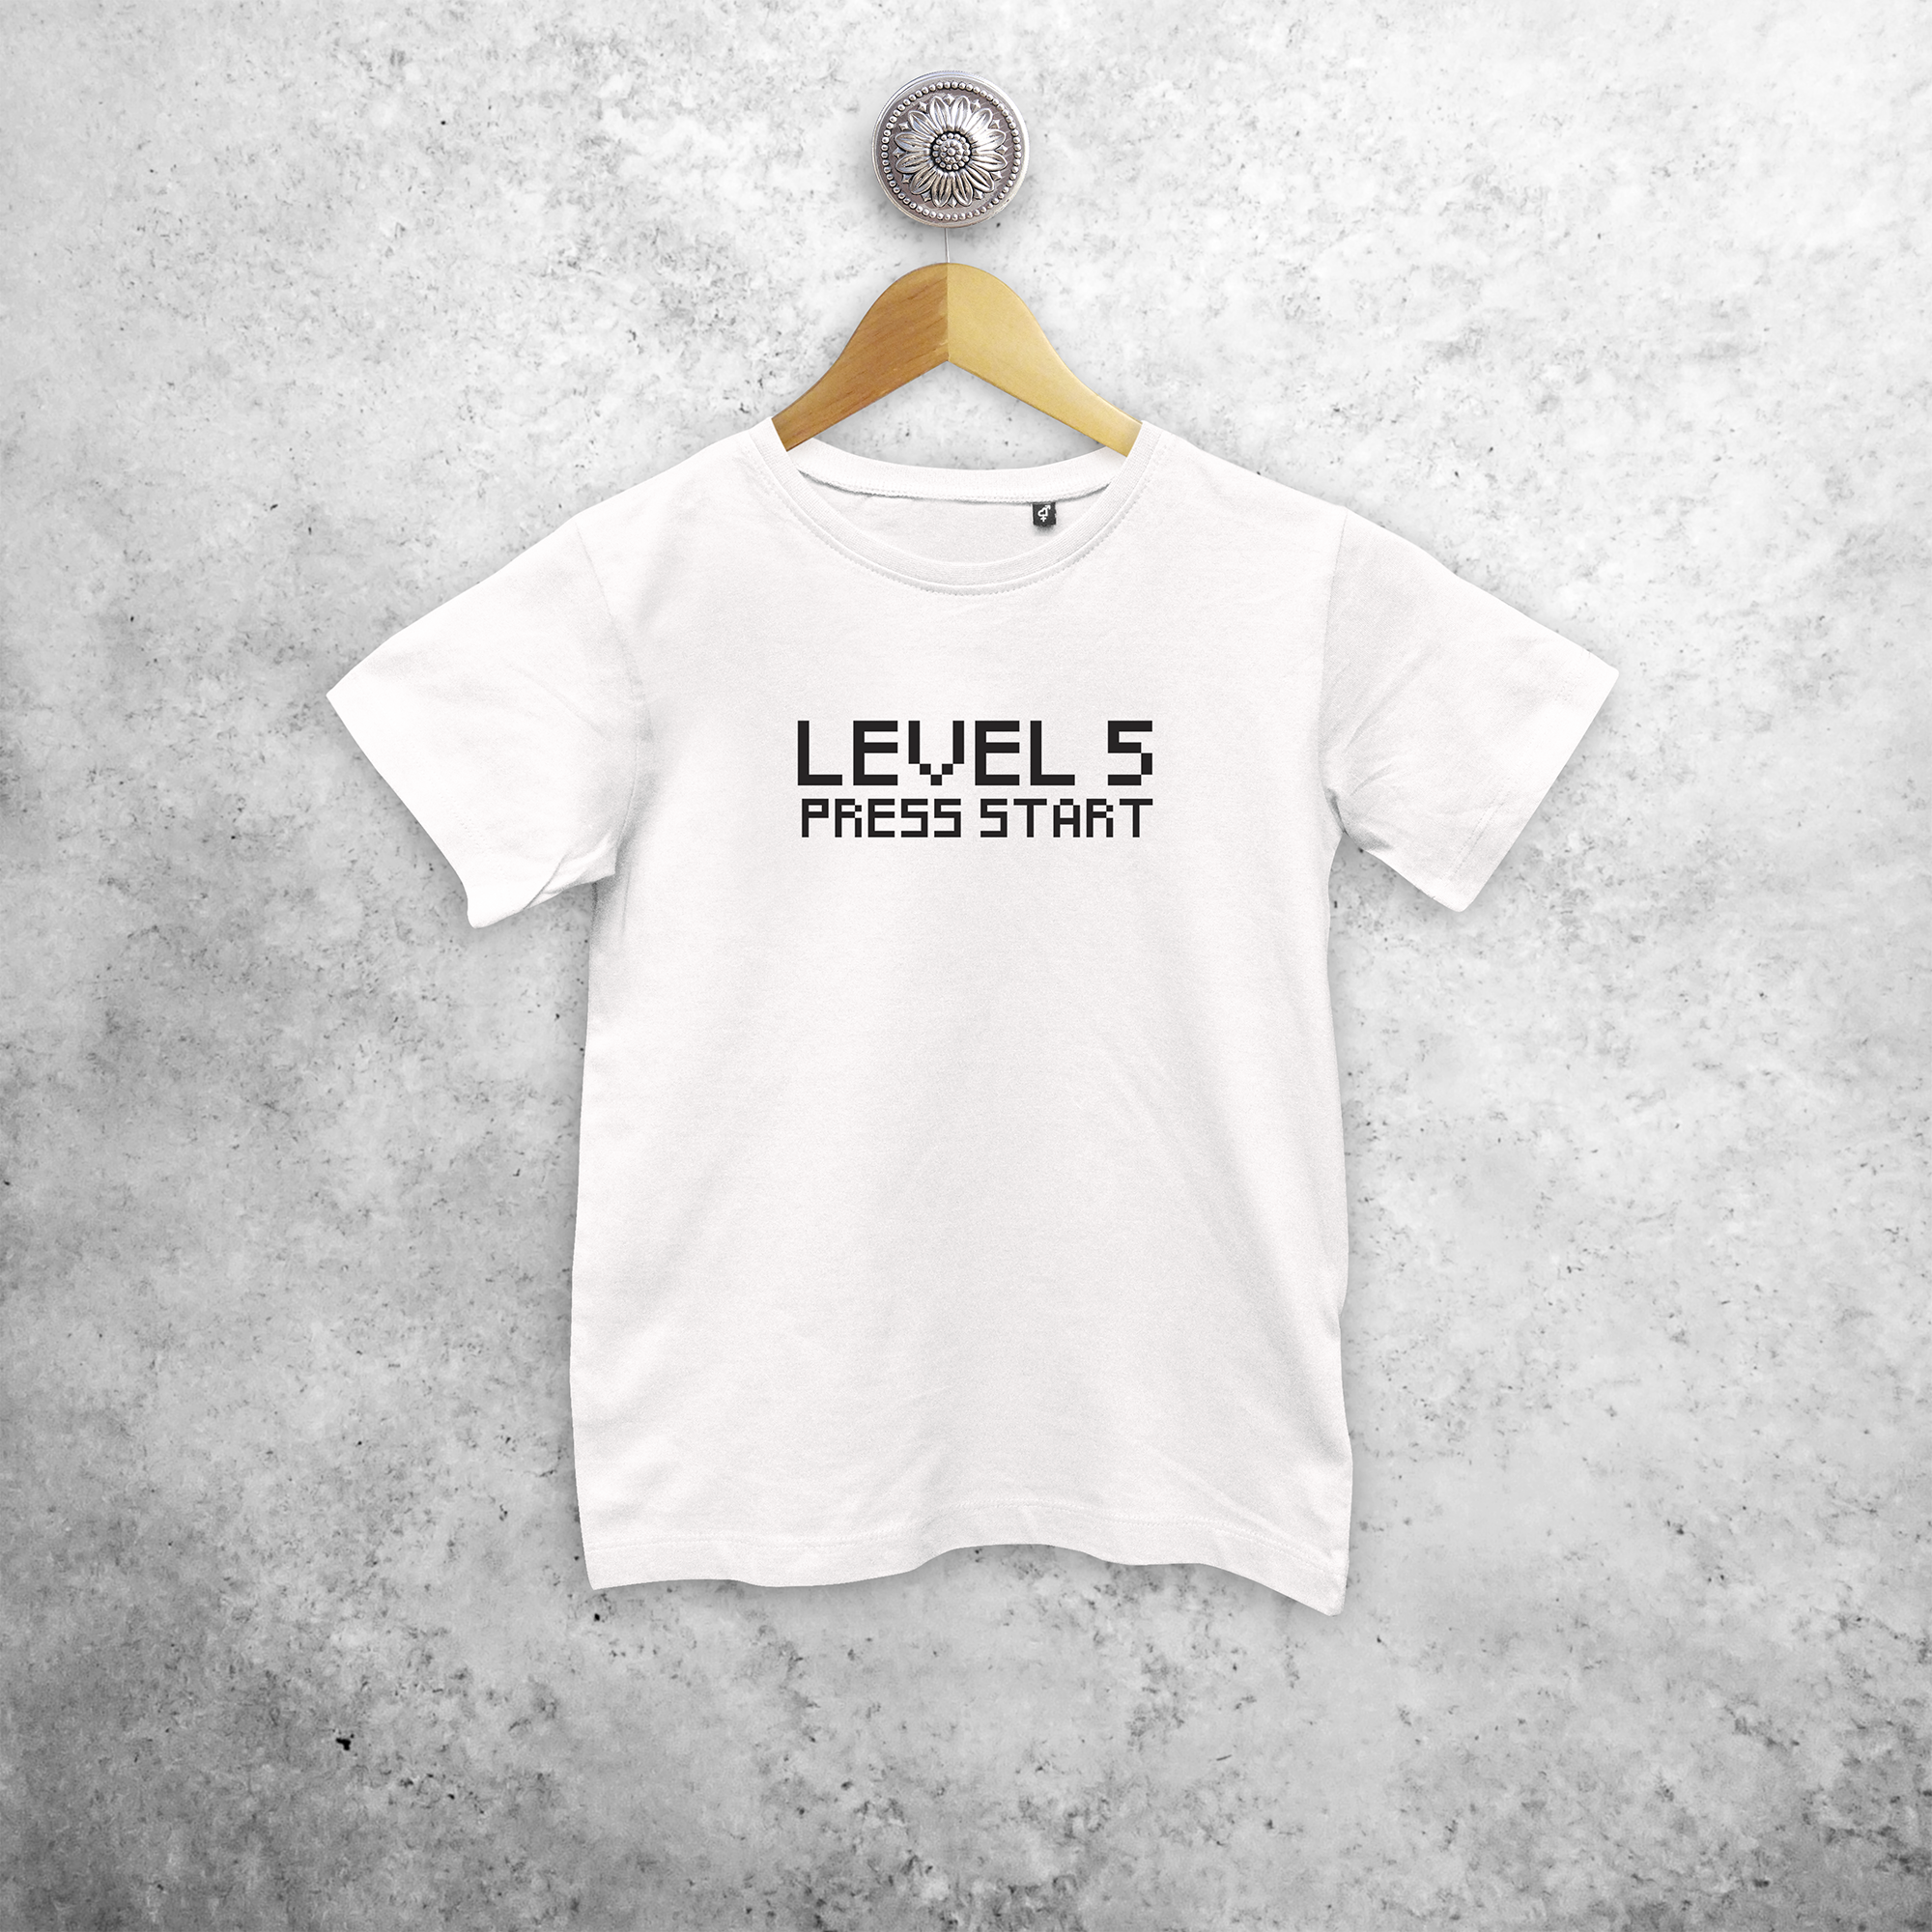 'Level... - Press start' kids shortsleeve shirt